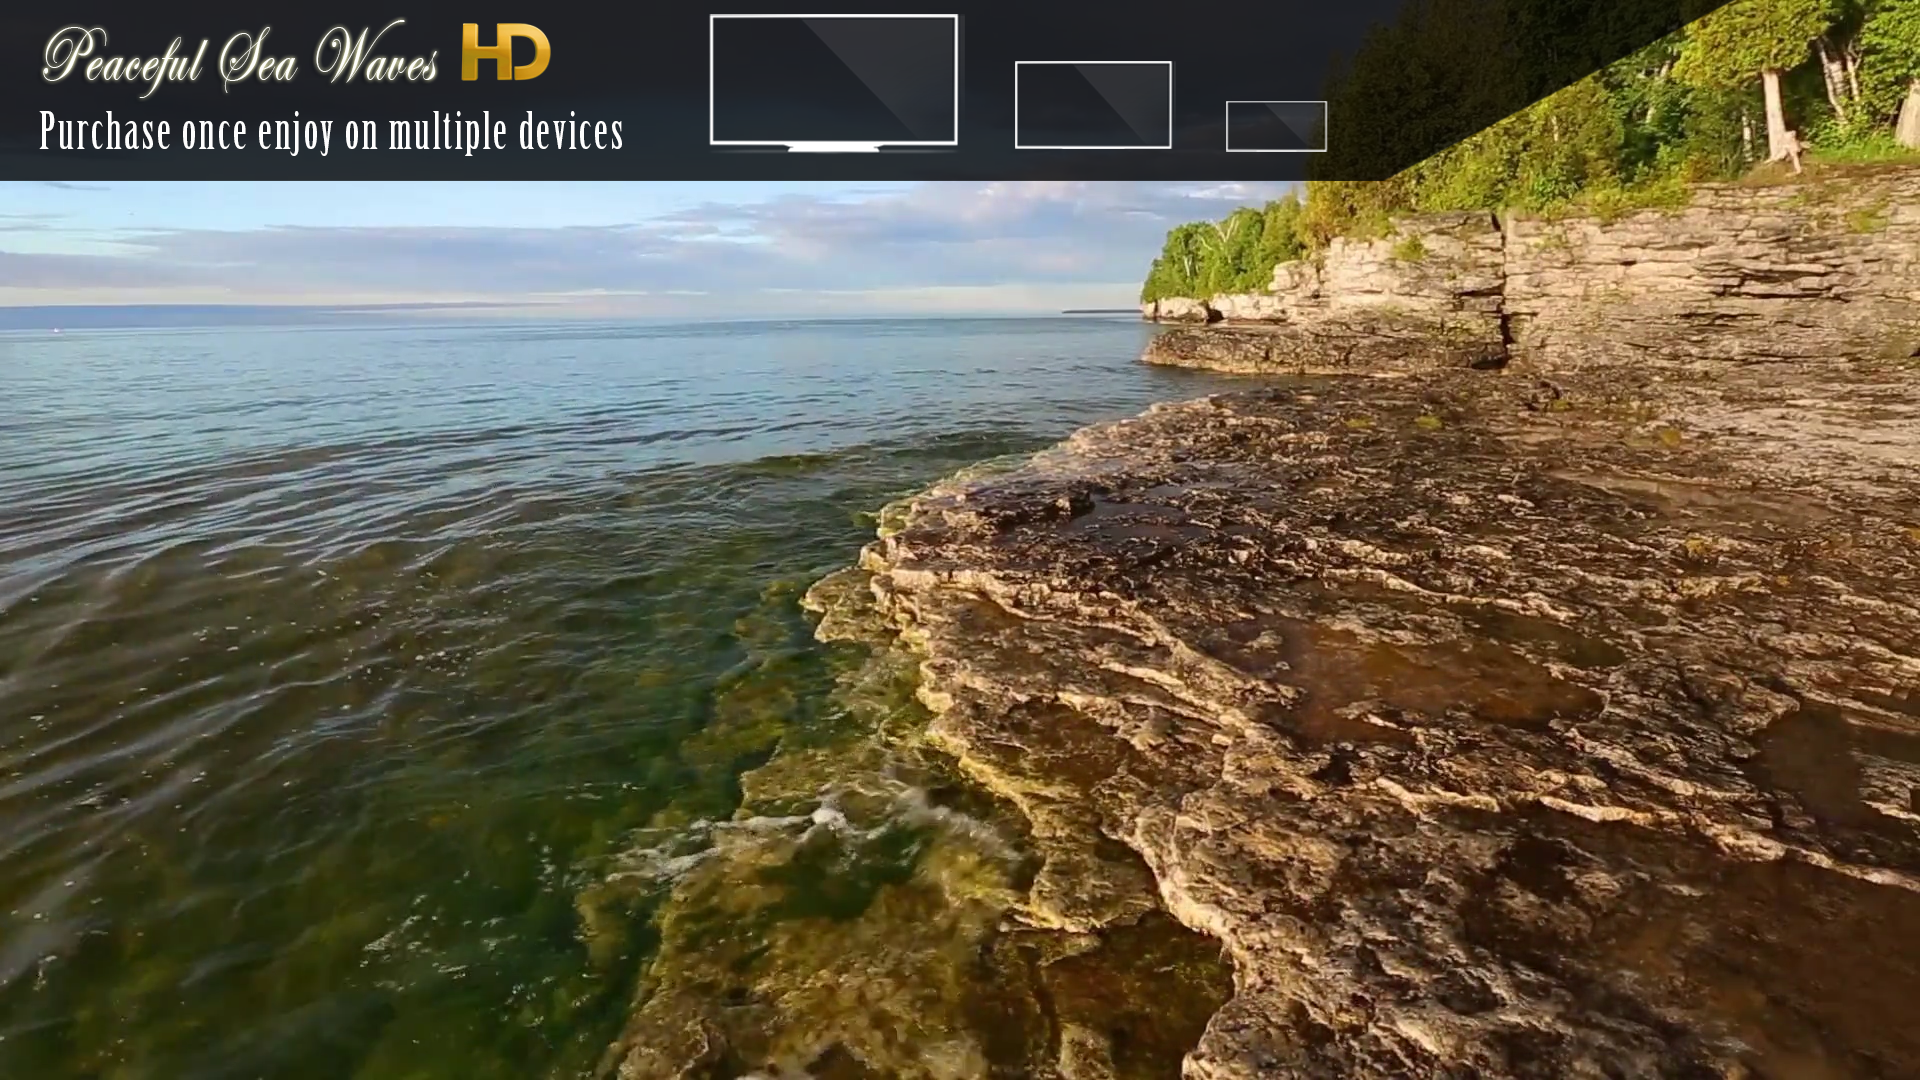 Peaceful Sea Waves HD screenshot 12